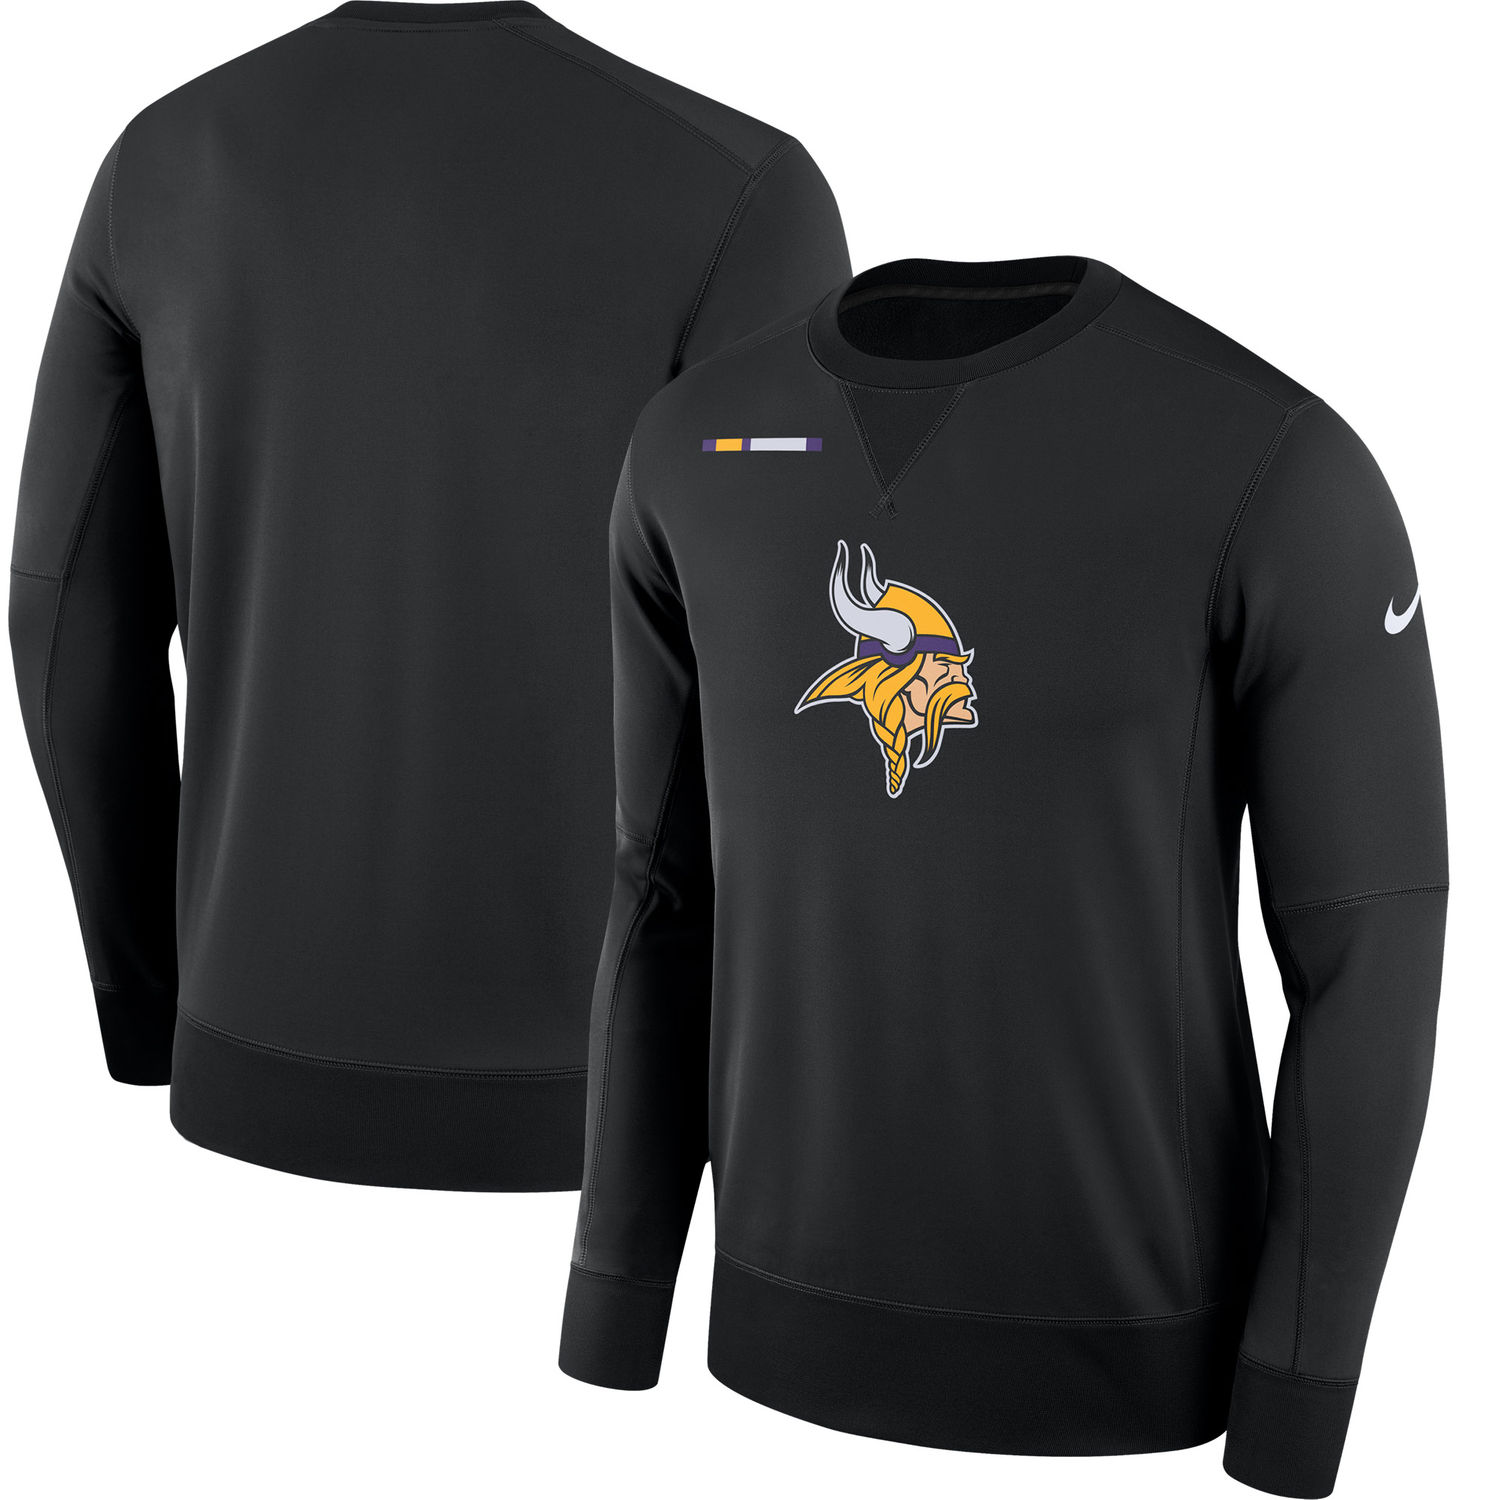 Men's Minnesota Vikings Nike Black Sideline Team Logo Performance Sweatshirt